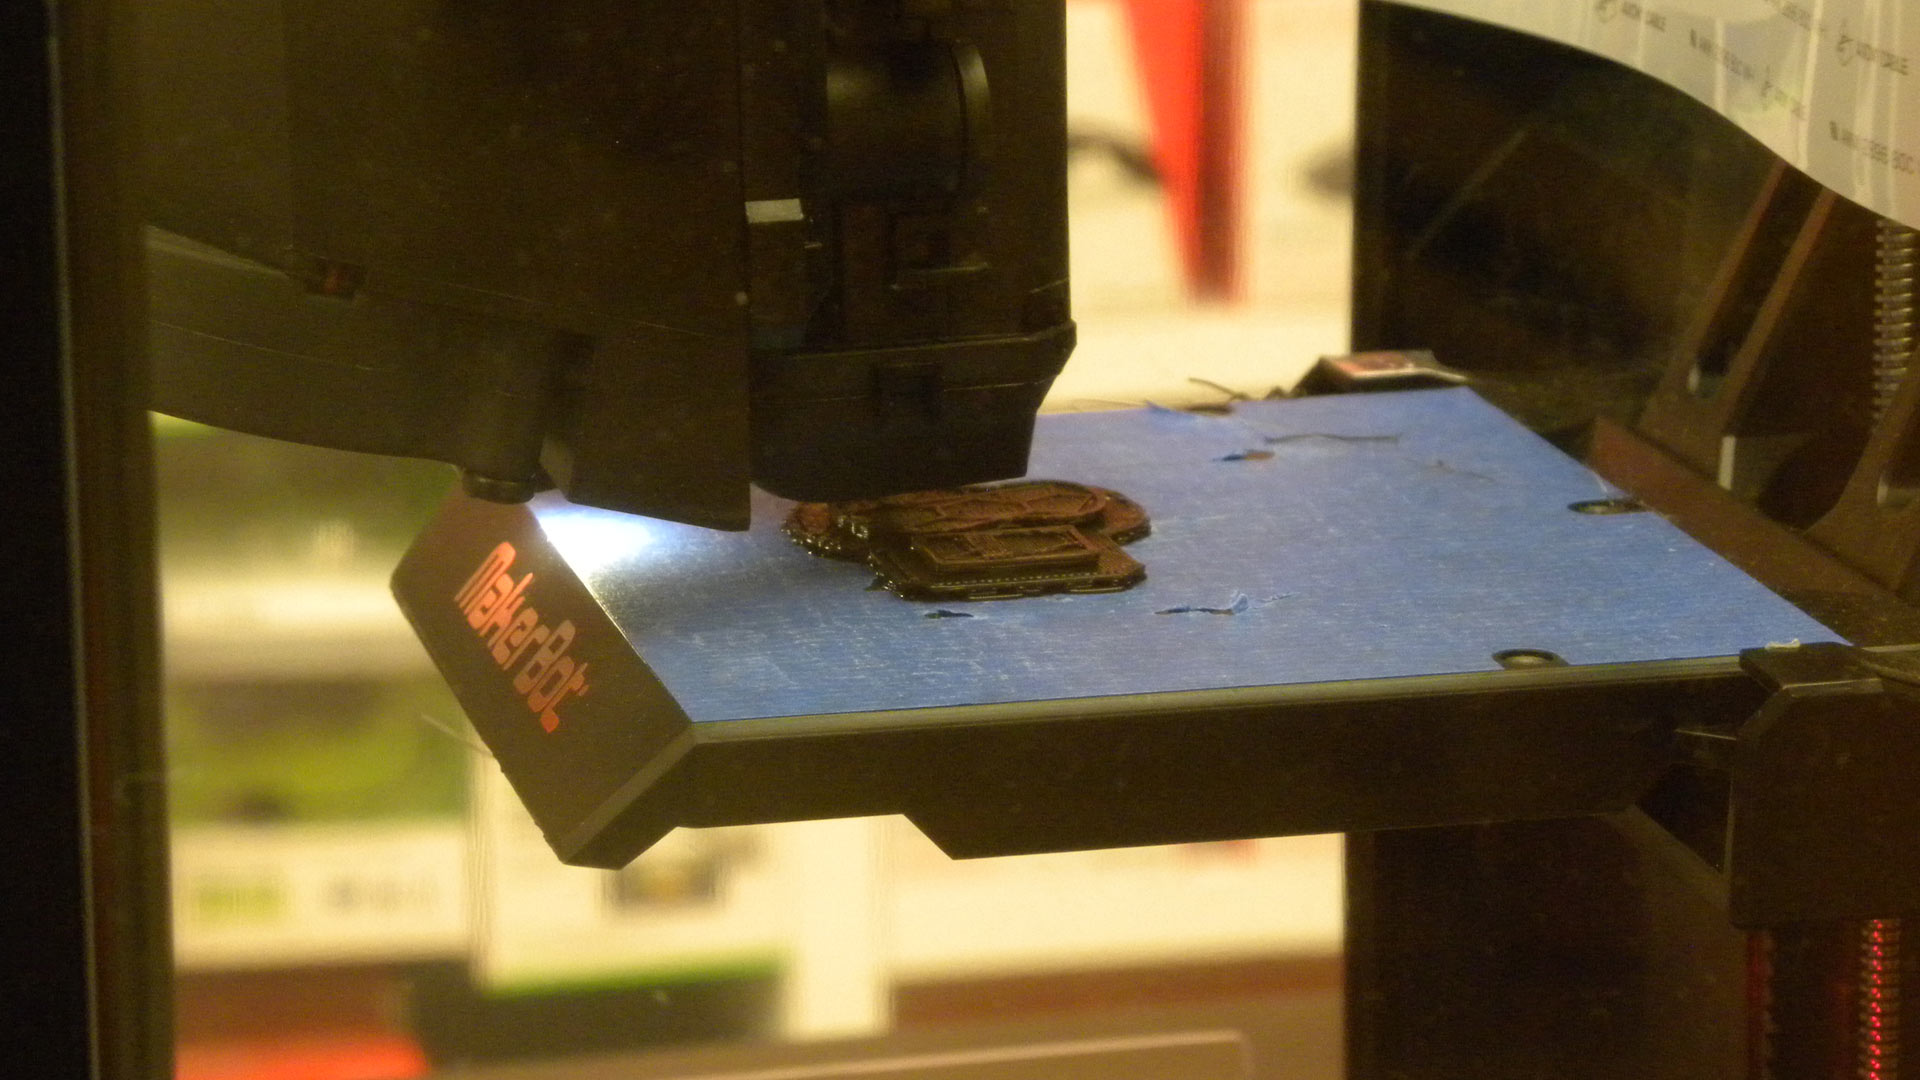 Calgary Microsoft Store 3D Printer Printing